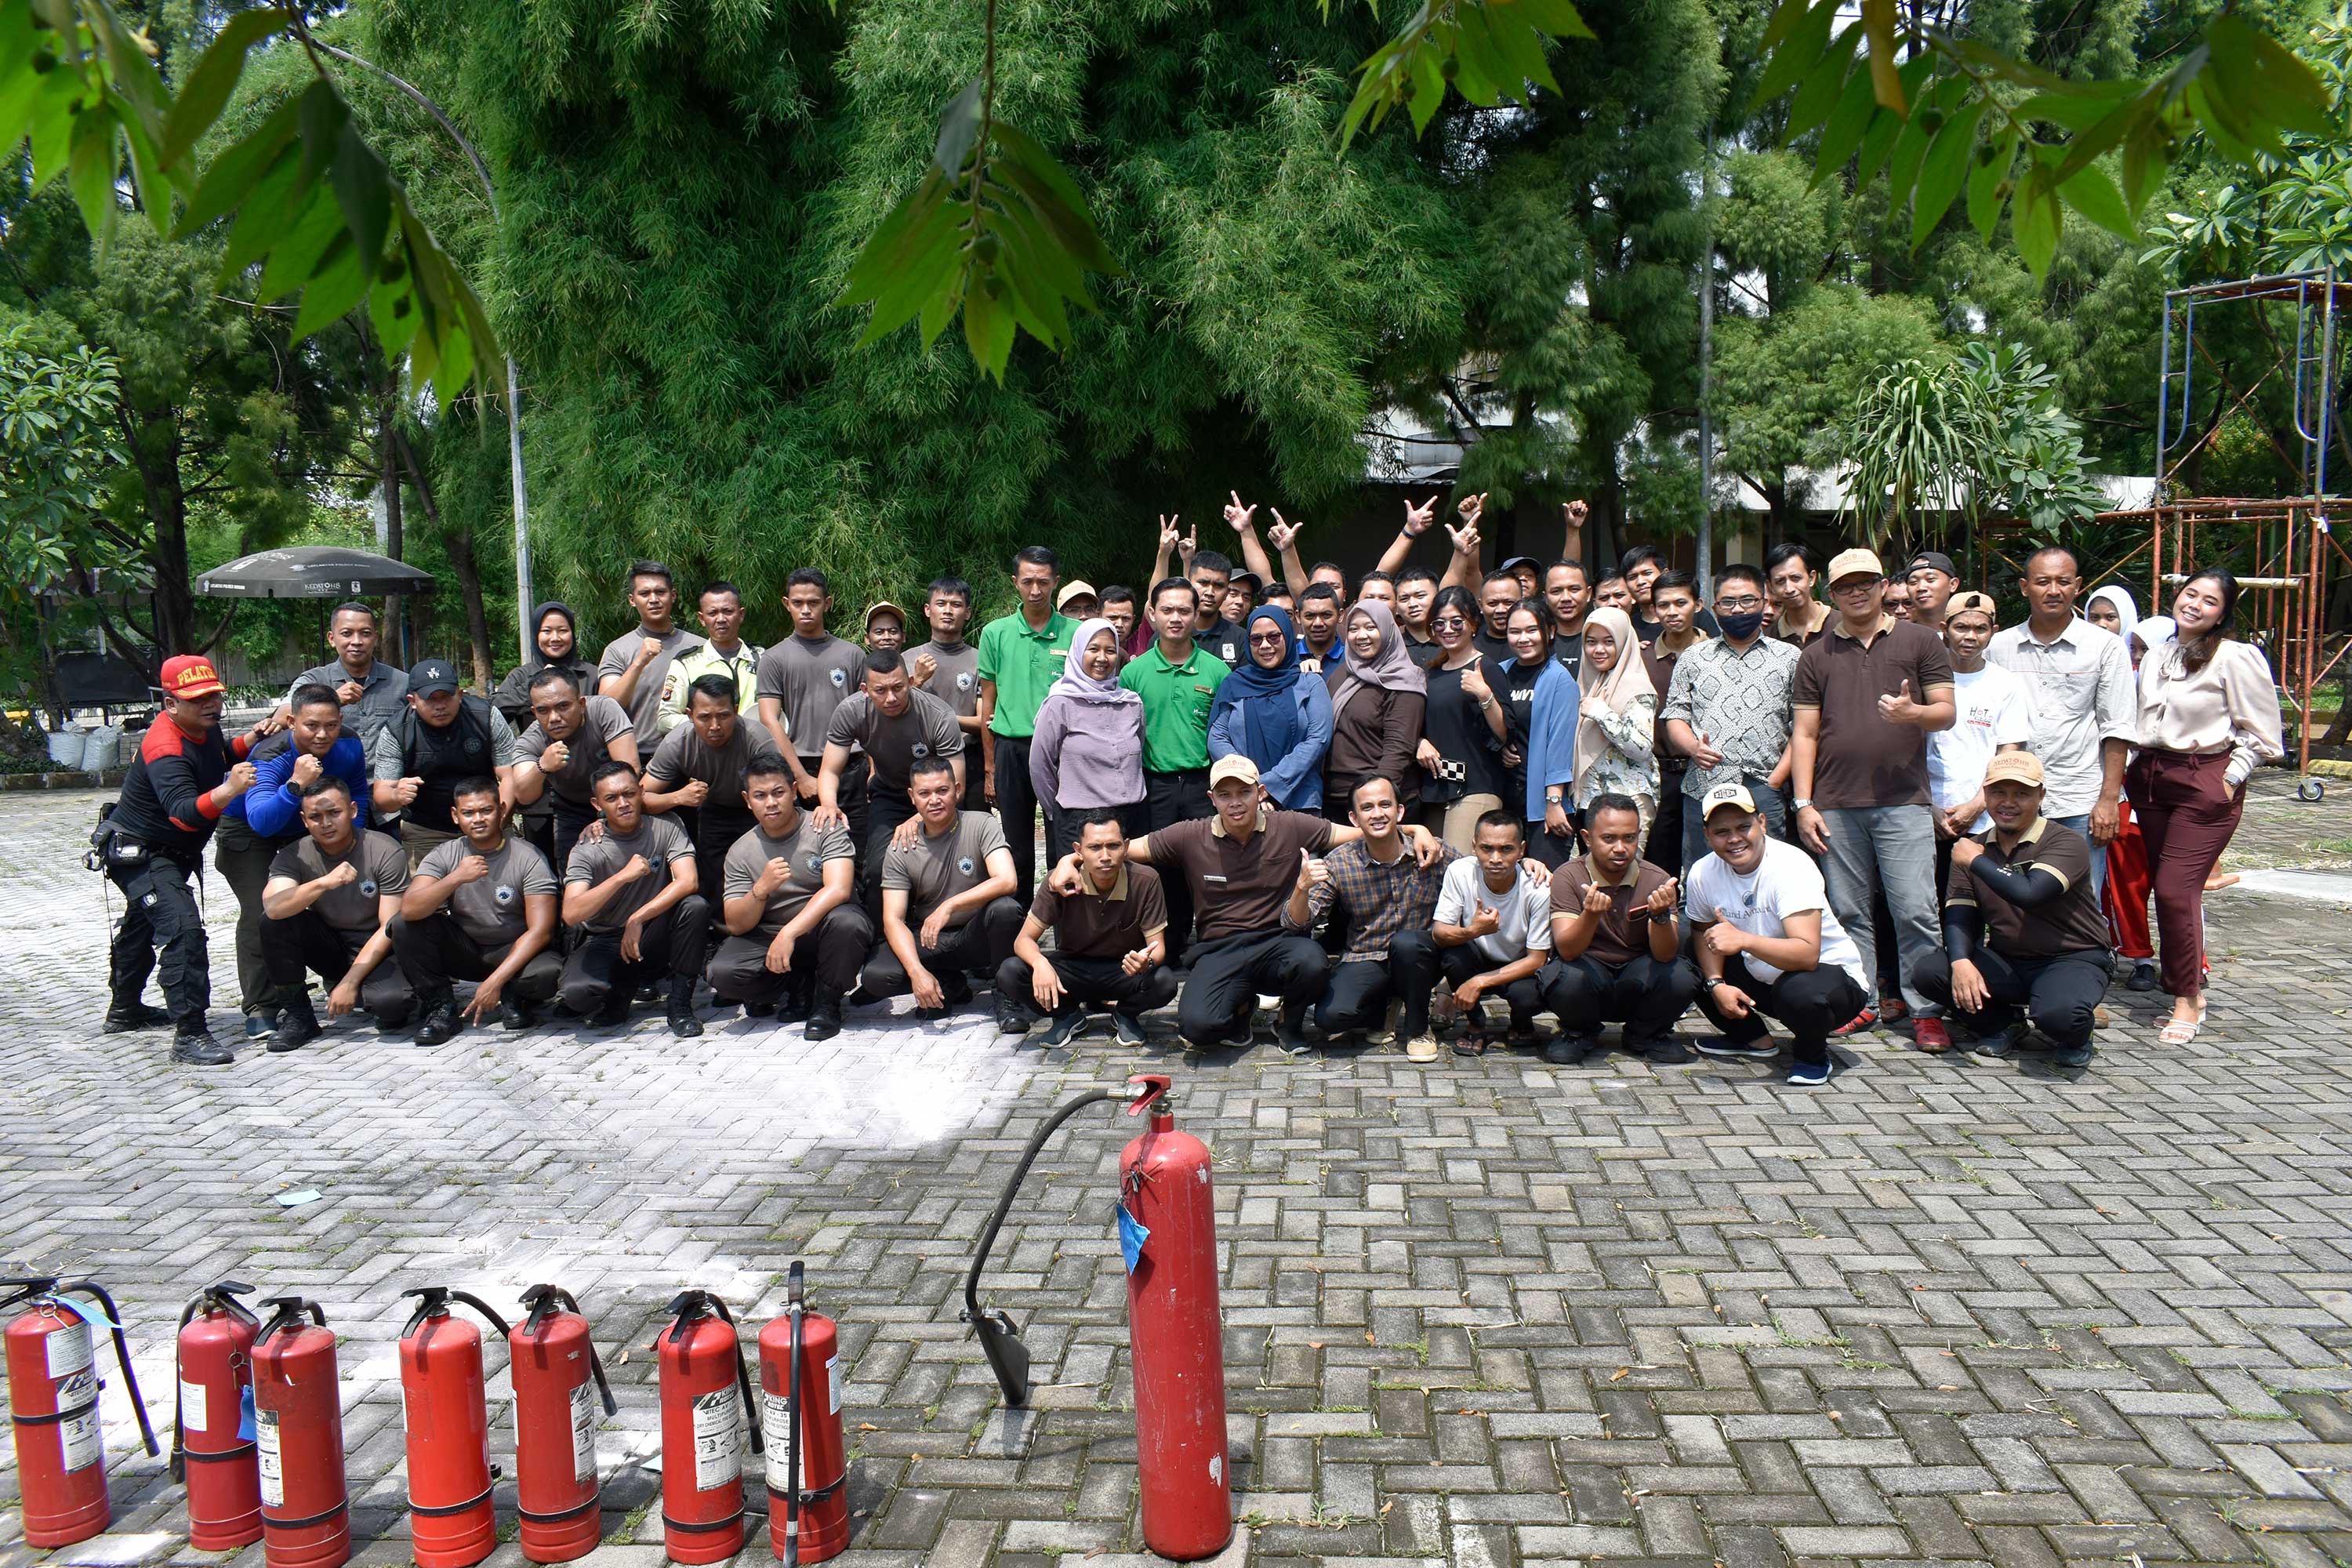 PT Puri Sentul Permai Tbk Menjadikan Keselamatan Sebagai Prioritas Utama Dengan Melakukan Pelatihan Pemadam Kebakaran Untuk Seluruh Karyawan